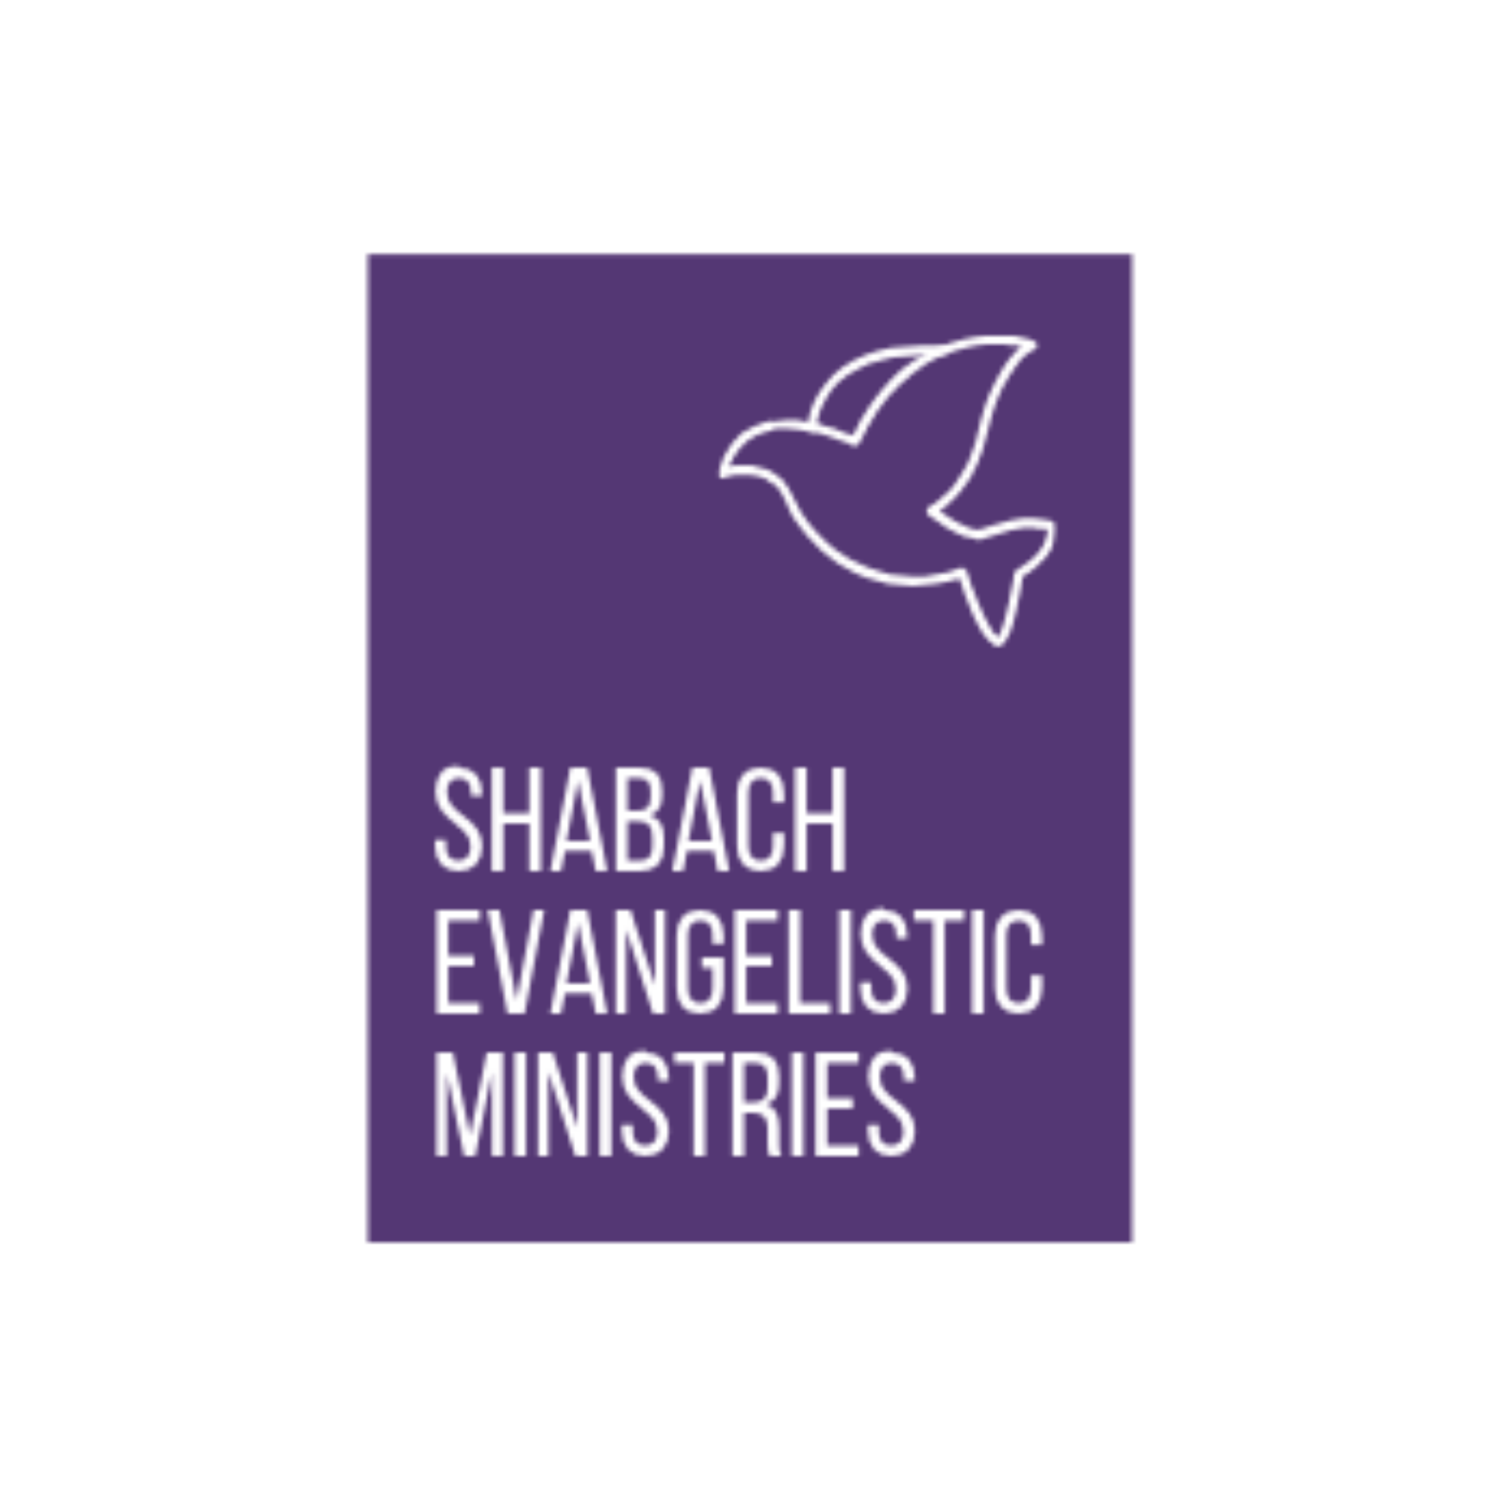 SHABACH EVANGELISTIC MINISTRIES